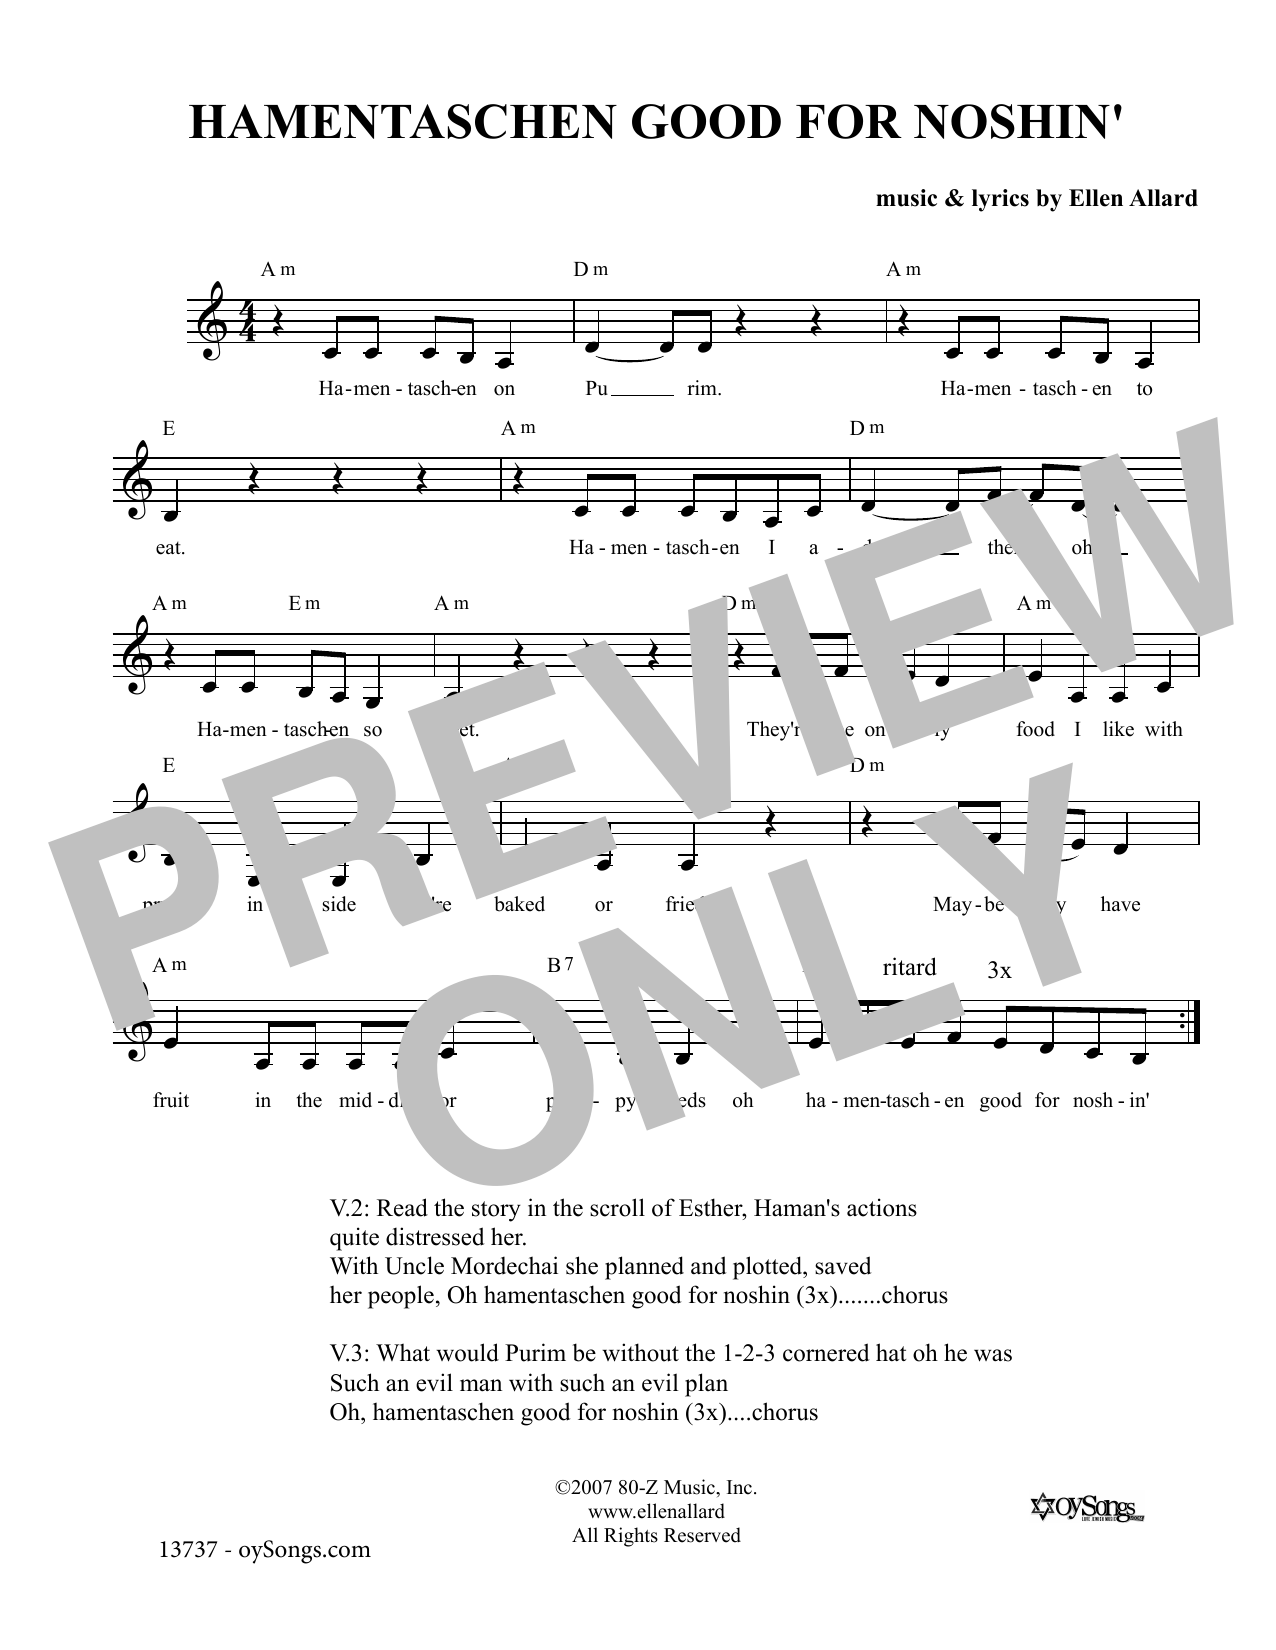 Ellen Allard Hamentaschen Good For Noshin Sheet Music Notes & Chords for Melody Line, Lyrics & Chords - Download or Print PDF